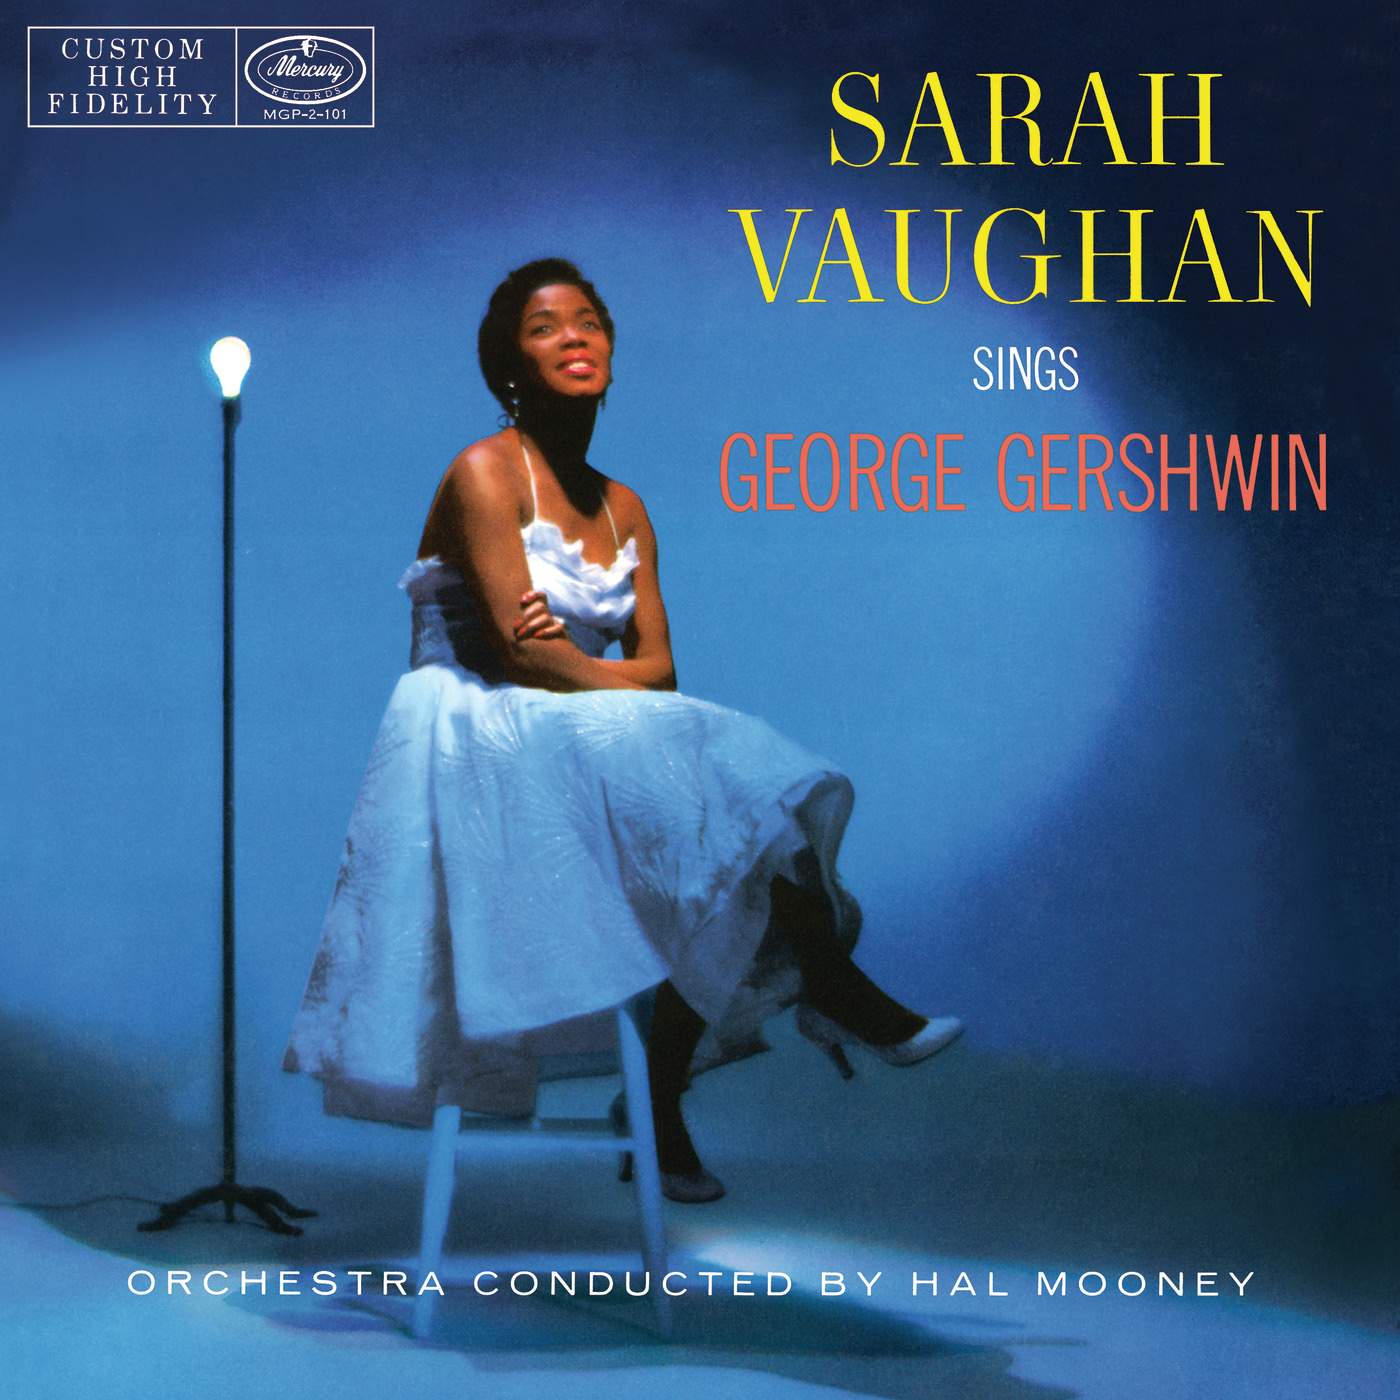 Sarah Vaughan Sings George Gershwin (1957/2017) [HDTracks FLAC 24bit/192kHz]